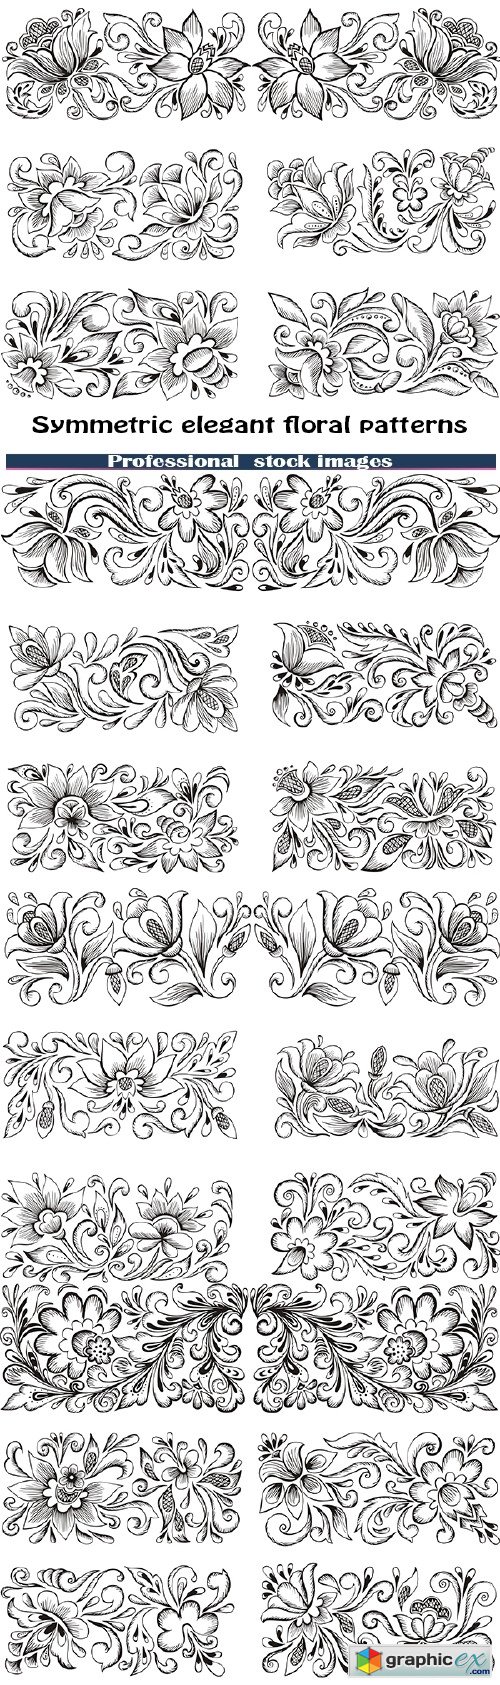 Symmetric elegant floral patterns